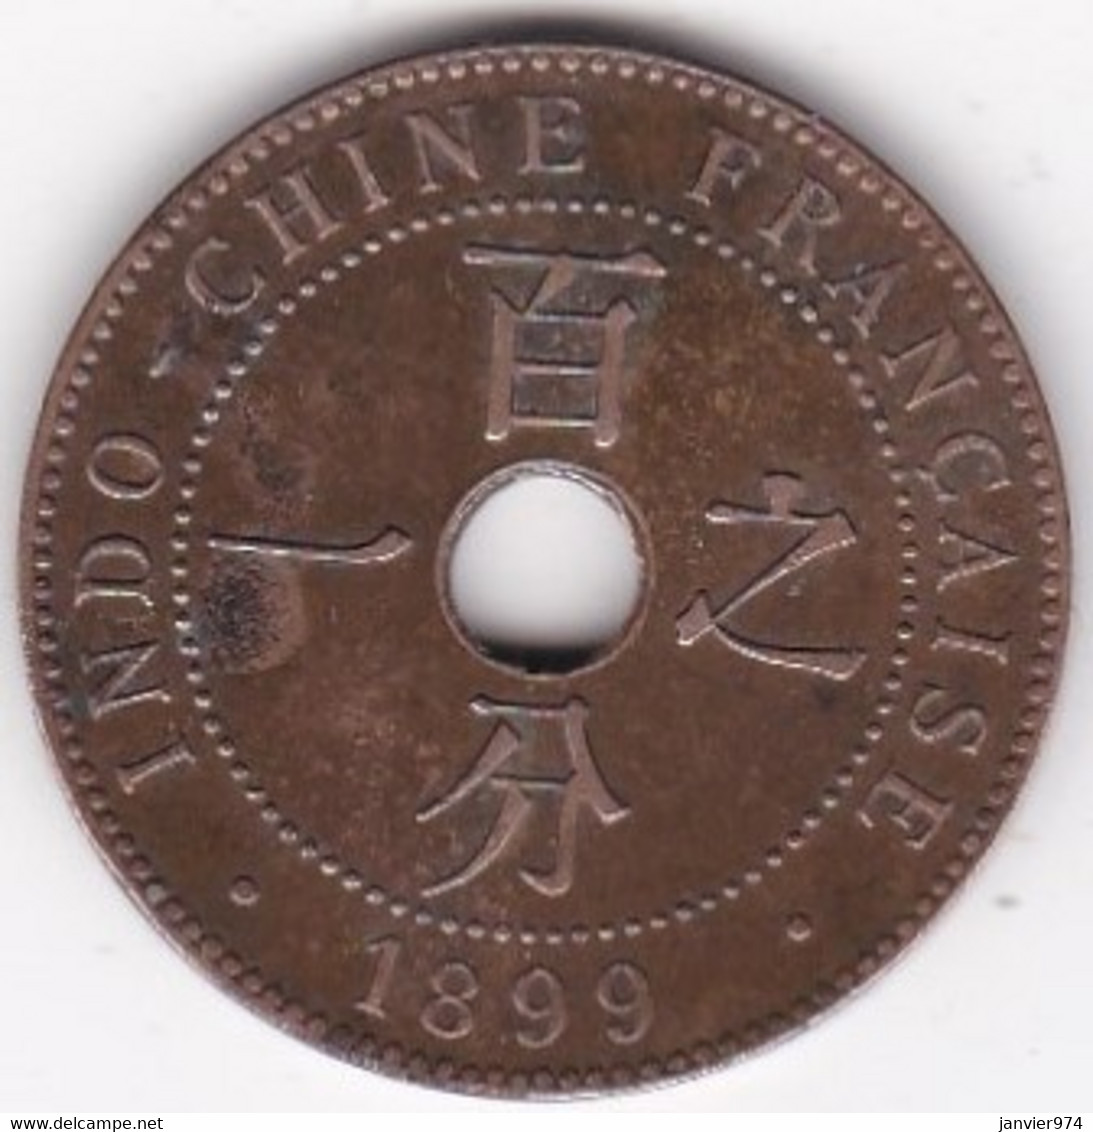 Indochine Française. 1 Cent 1899 A Paris. Bronze. Lec# 54, Sup/ XF - Indochine